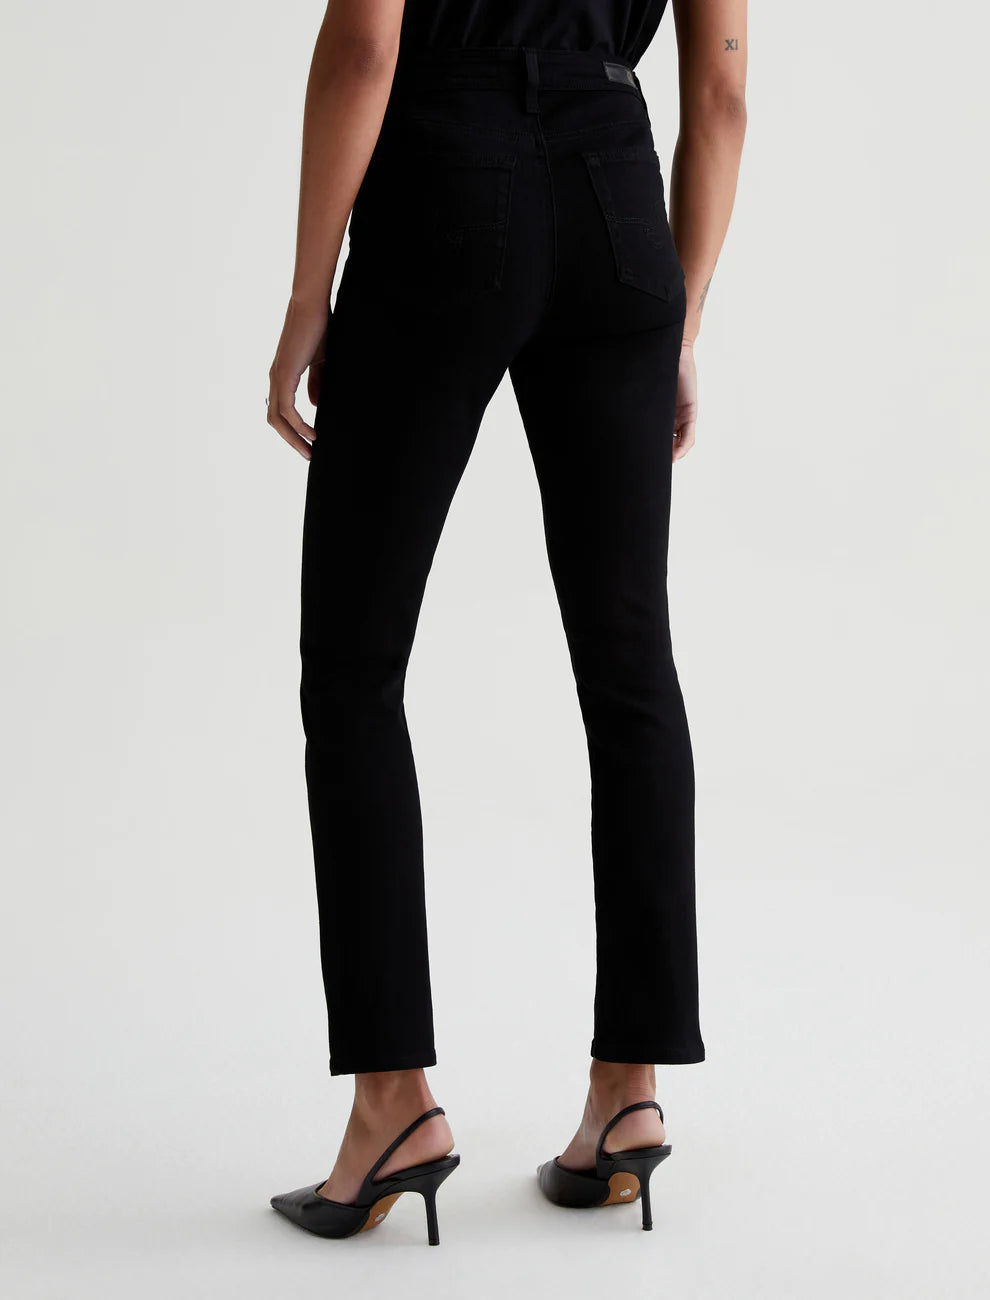 AG Jeans Mari - Opulent Black